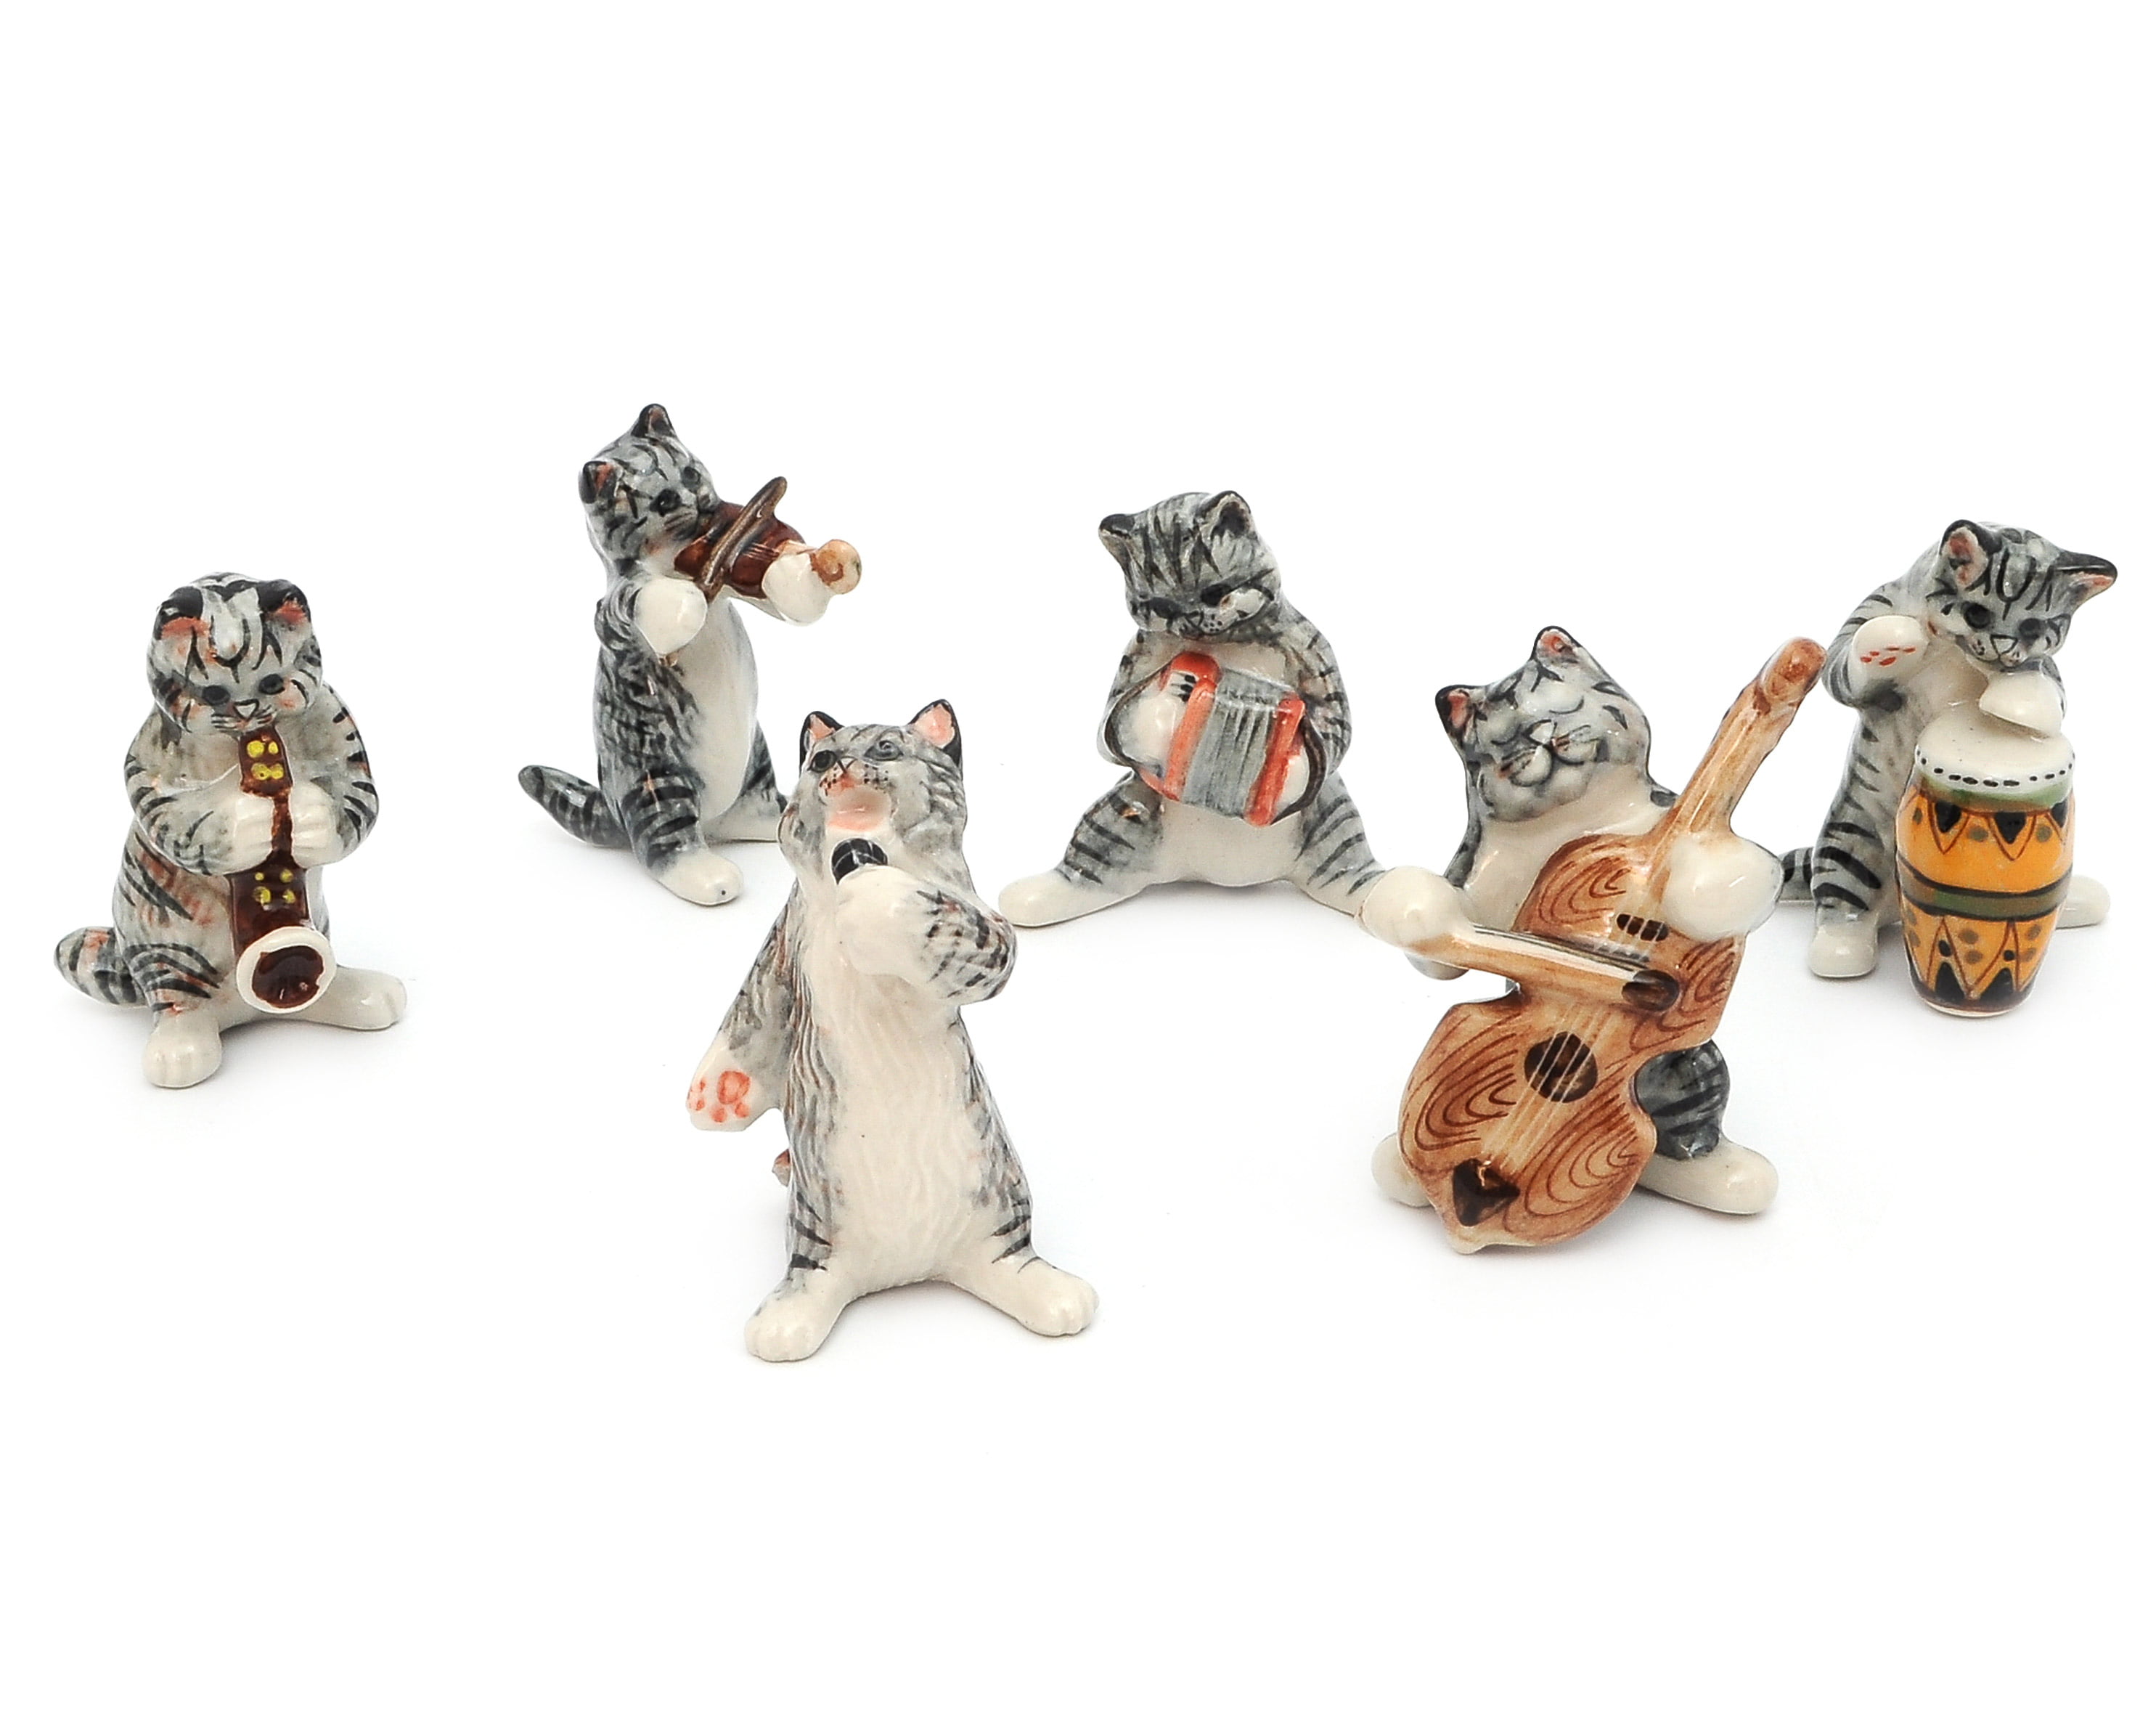 Elephant Music Band Ceramic Pottery Statue Animal Miniature Figurine#8